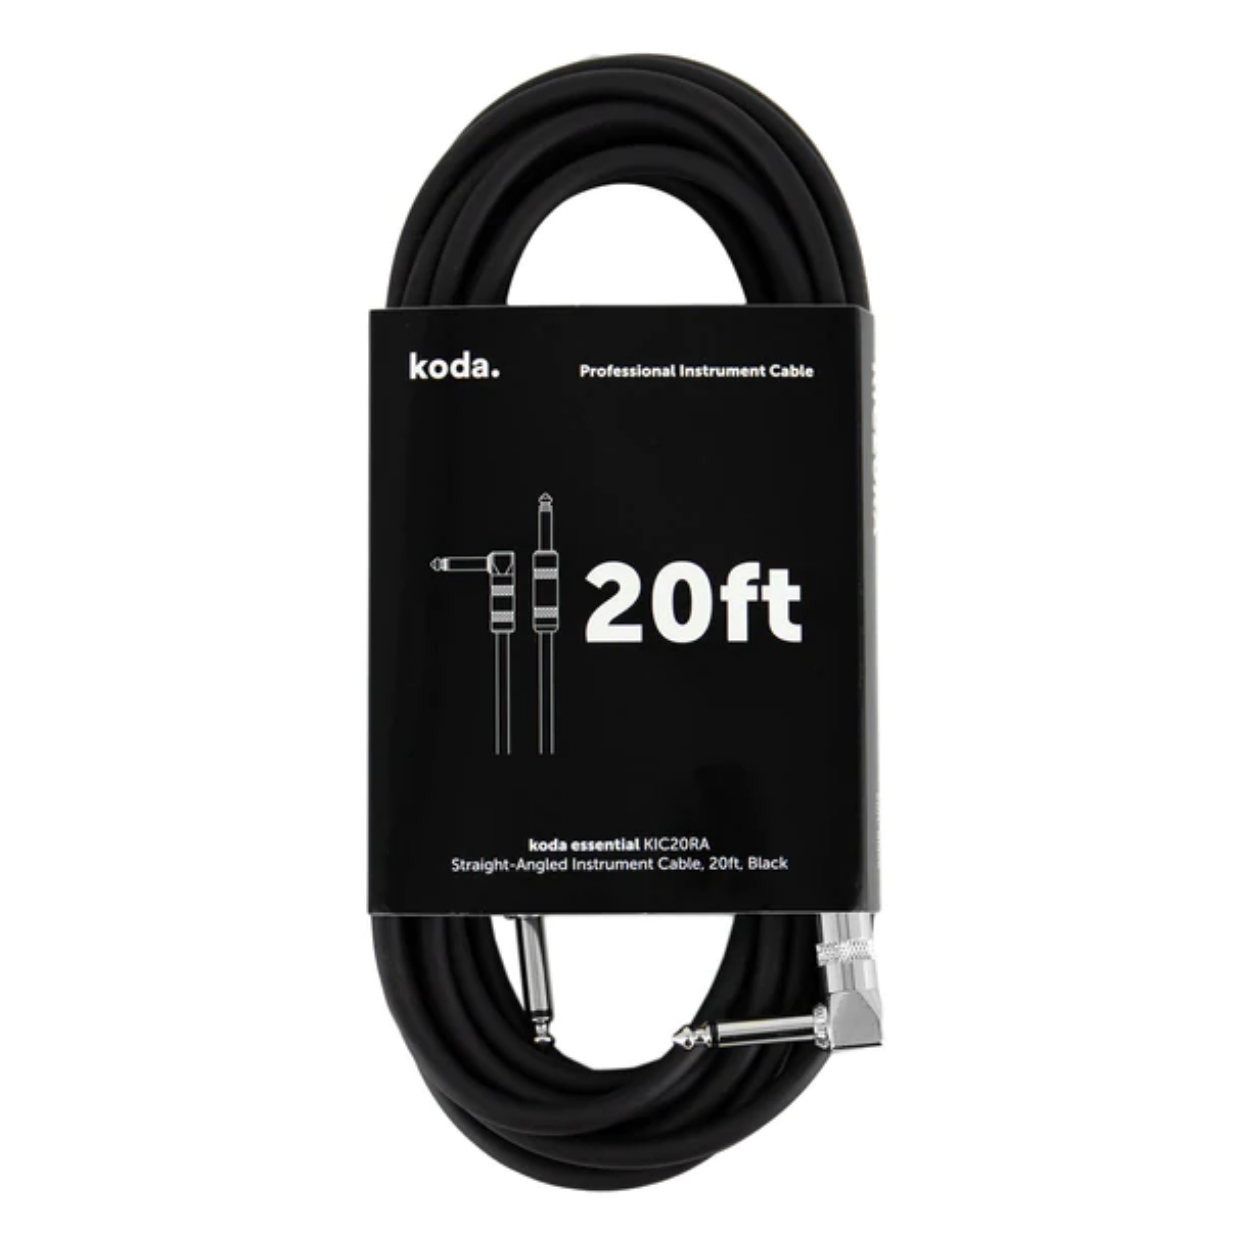 koda essential KIC20RA Straight-Angled Instrument Cable, 20ft, Black